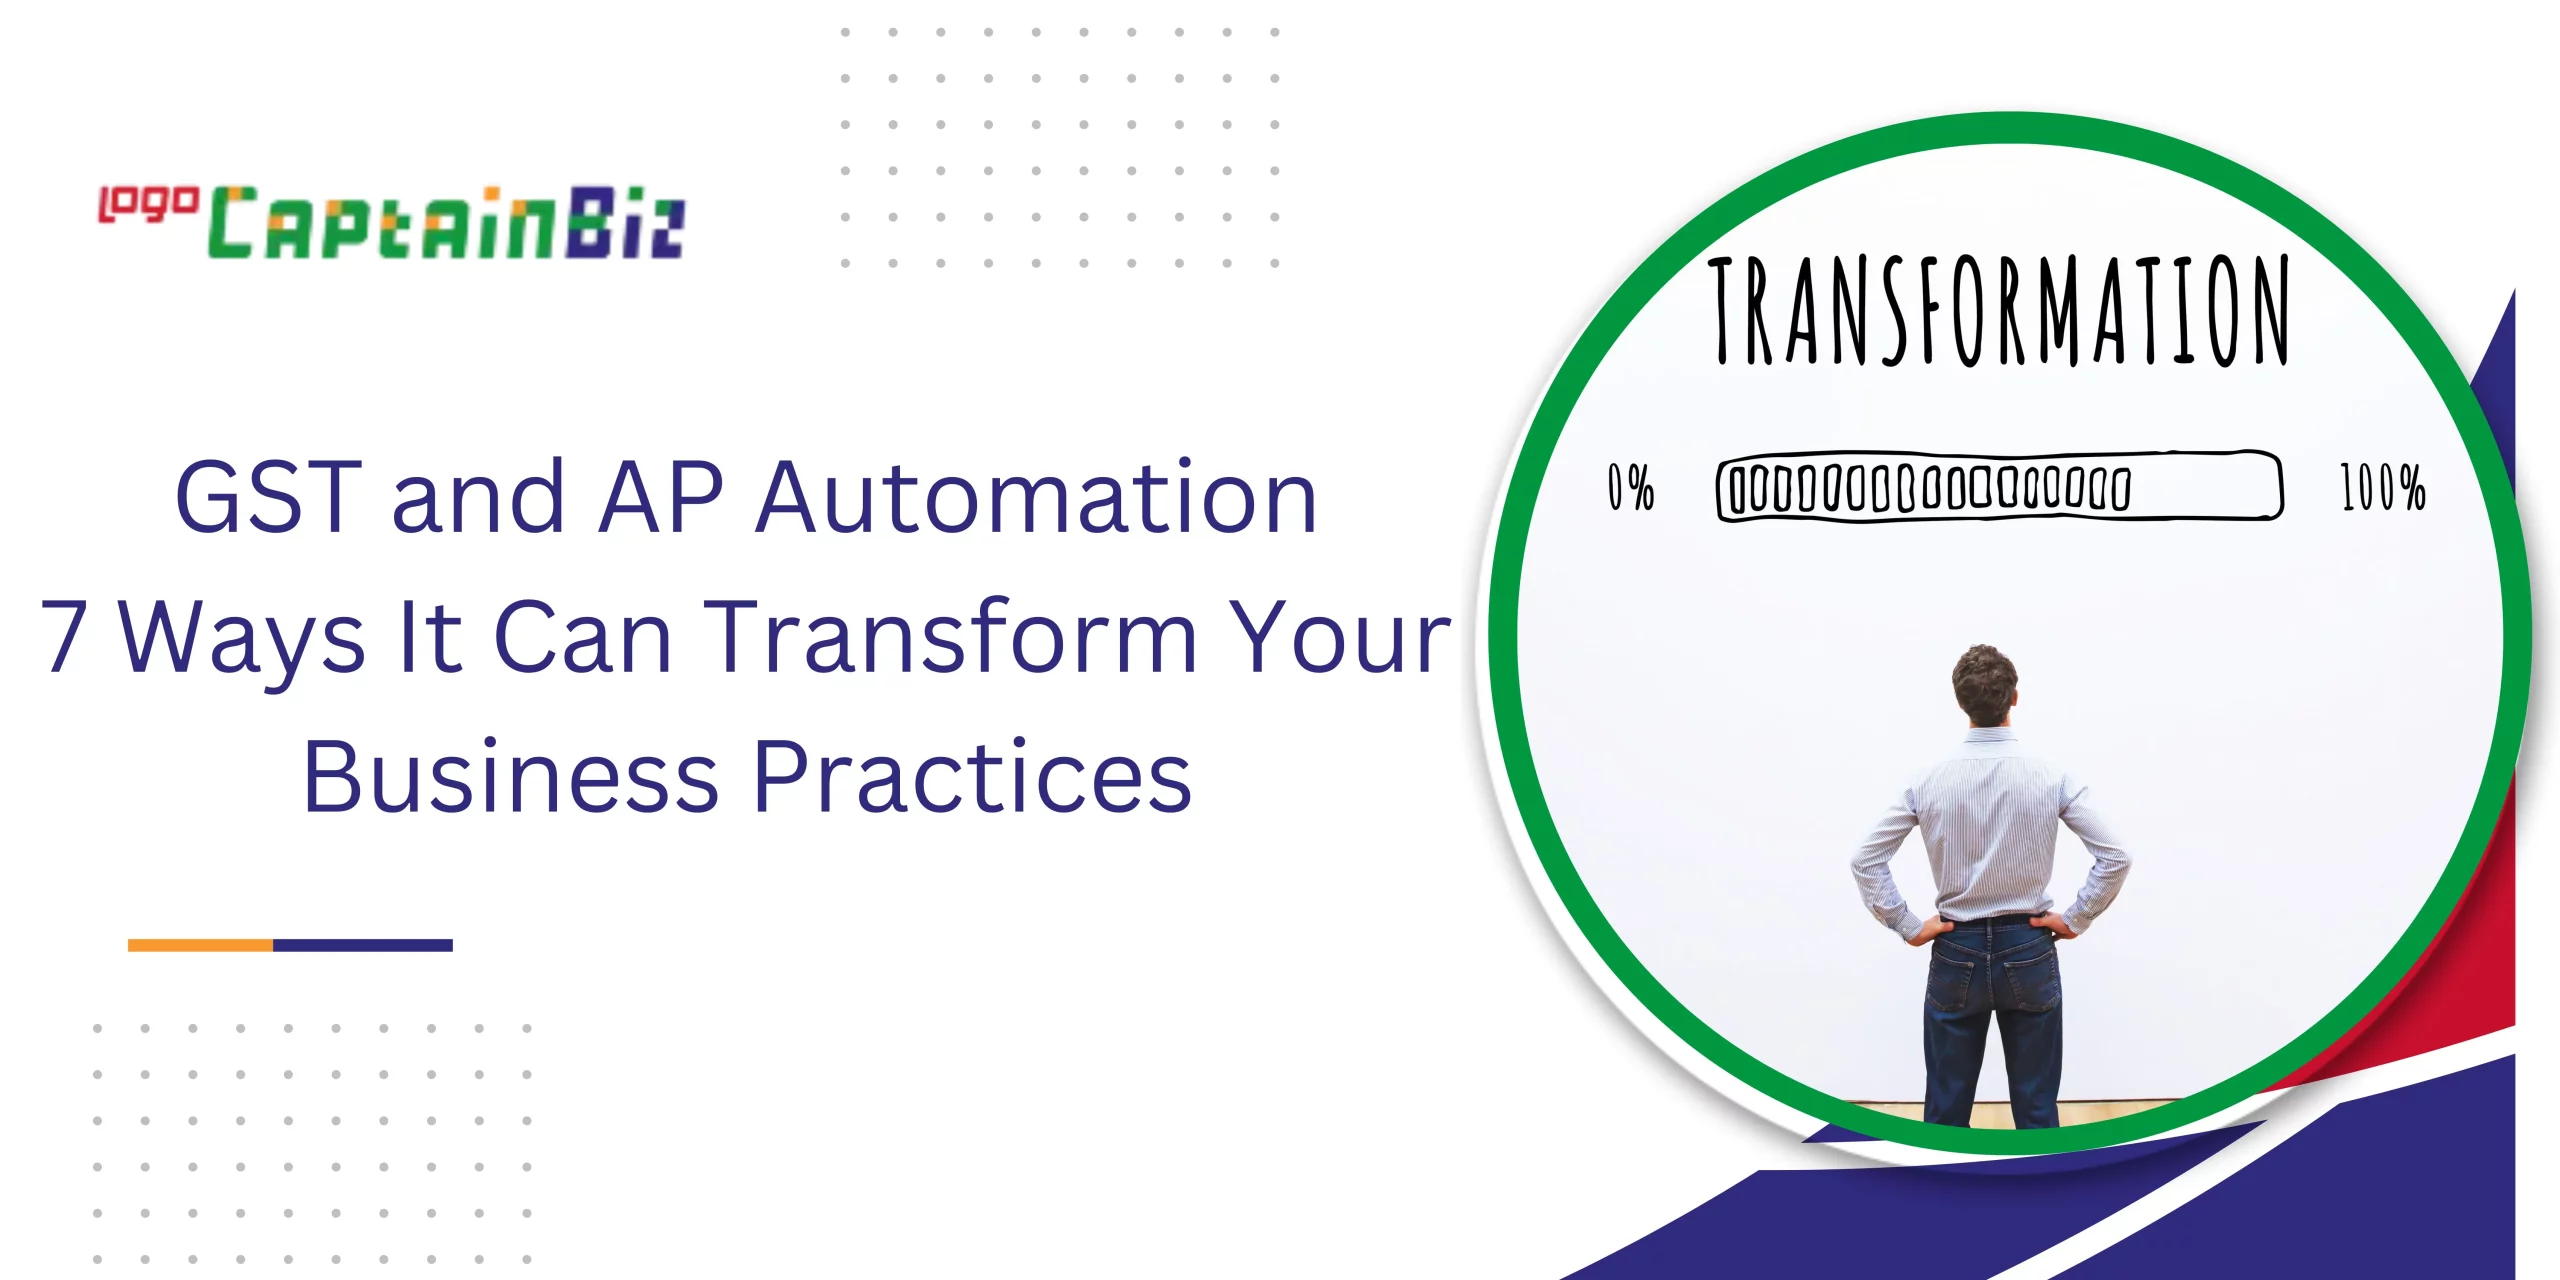 captainbiz gst and ap automation ways it can transform your business practices